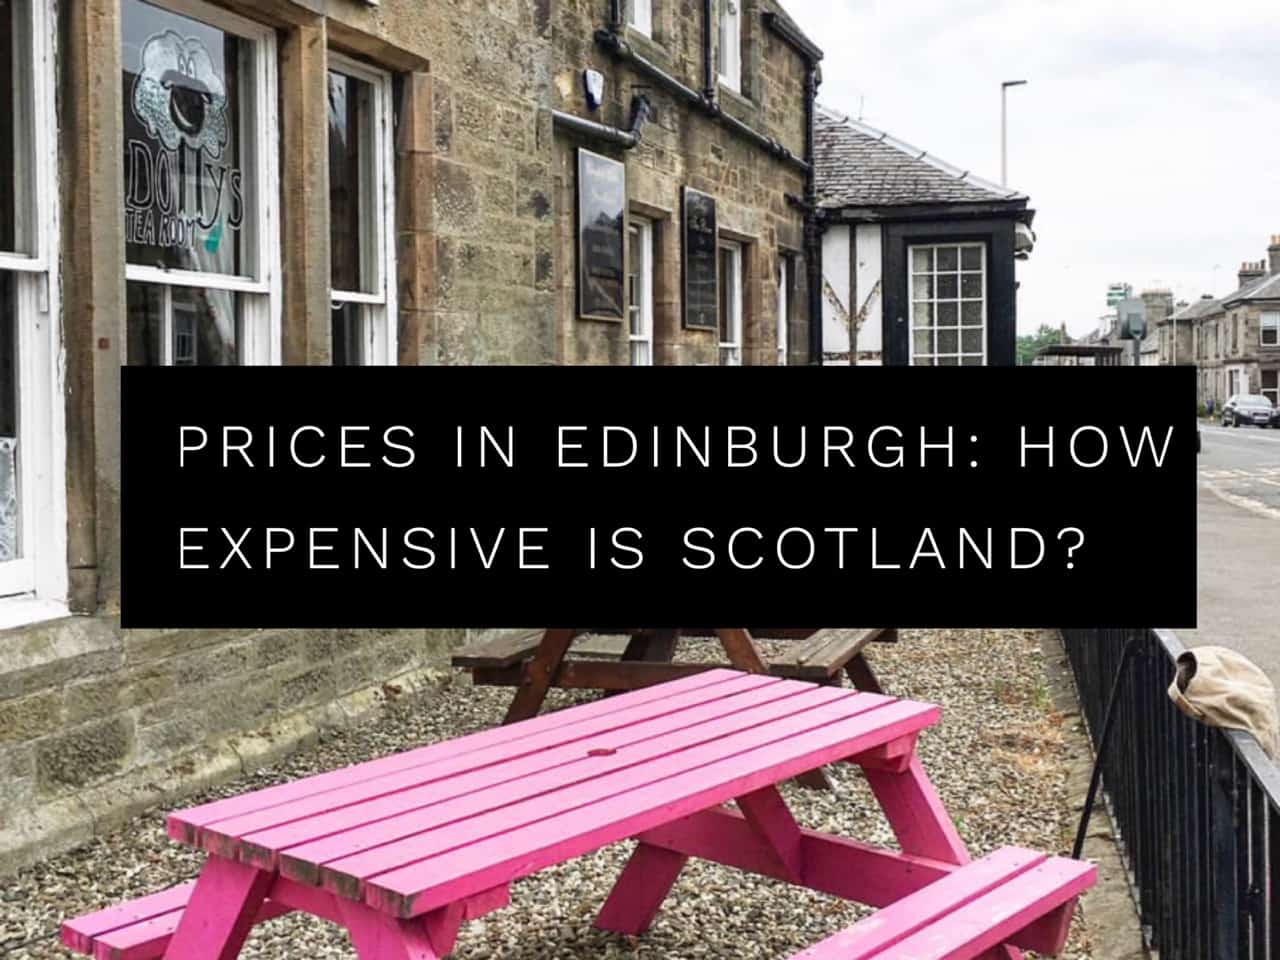 Edinburgh prices. Guide to prices in Edinburgh, Scotland